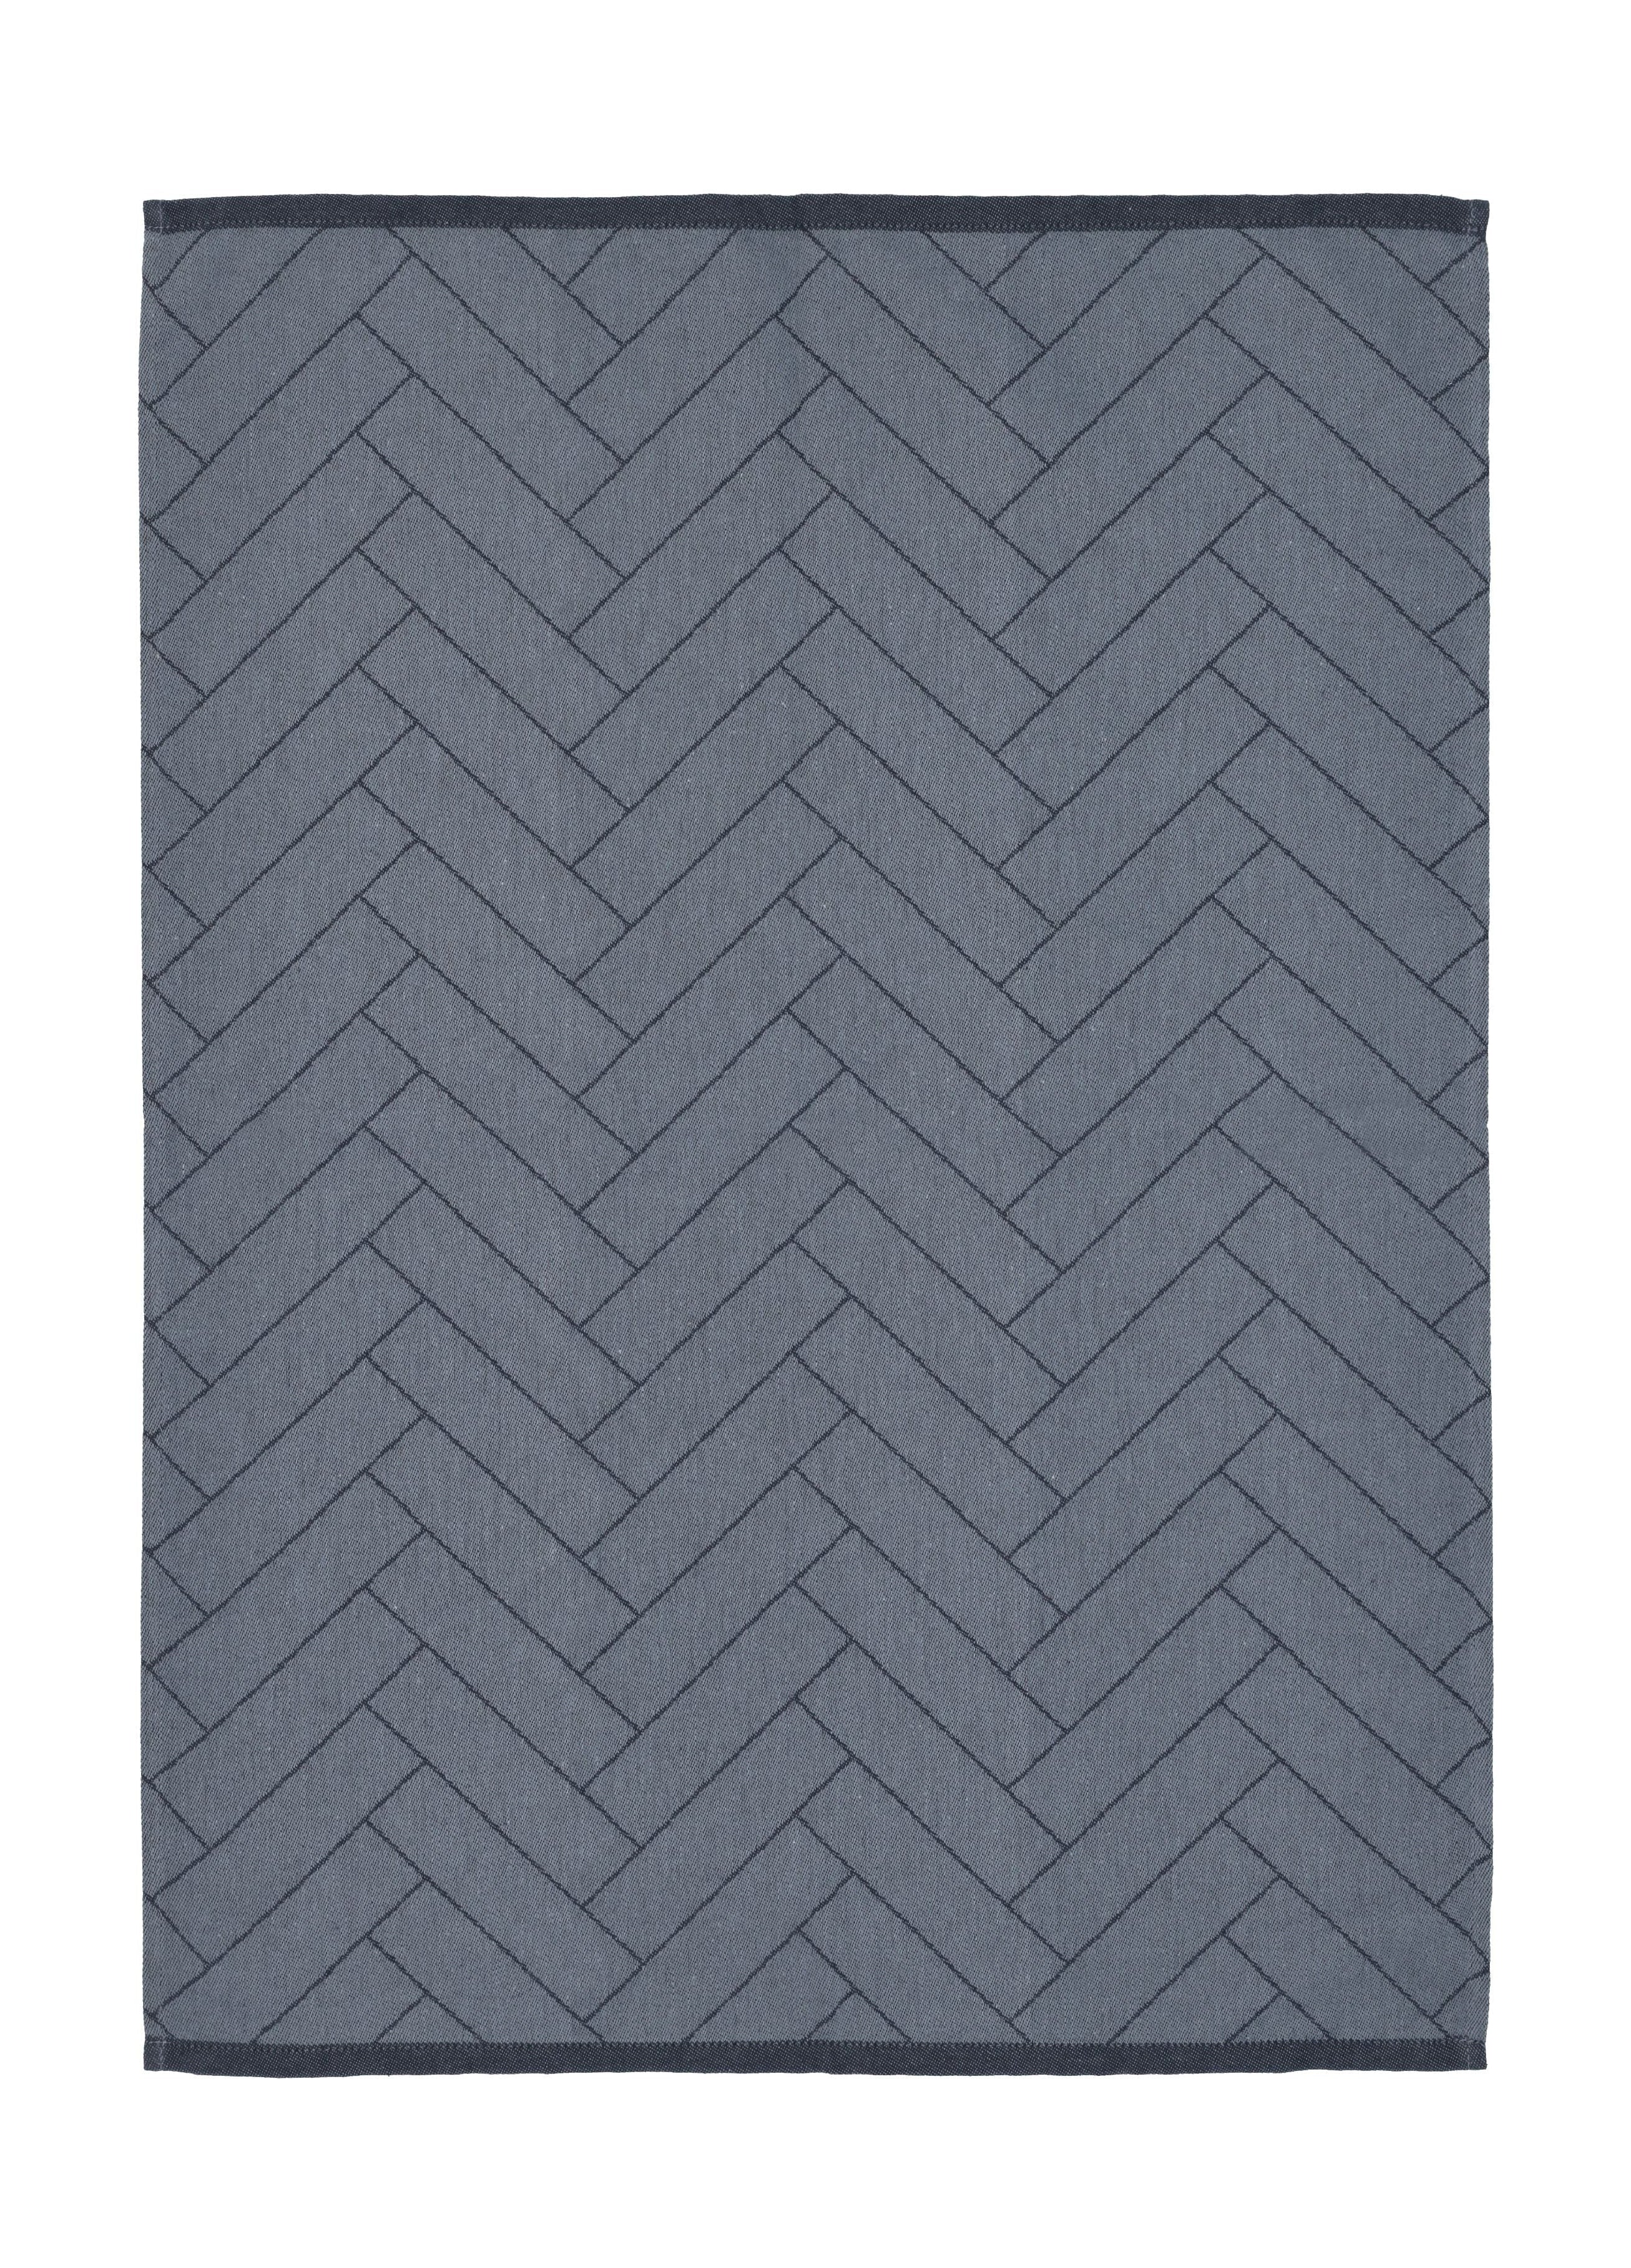 Södahl Tiles Trotuch 50x70 cm, Indigo